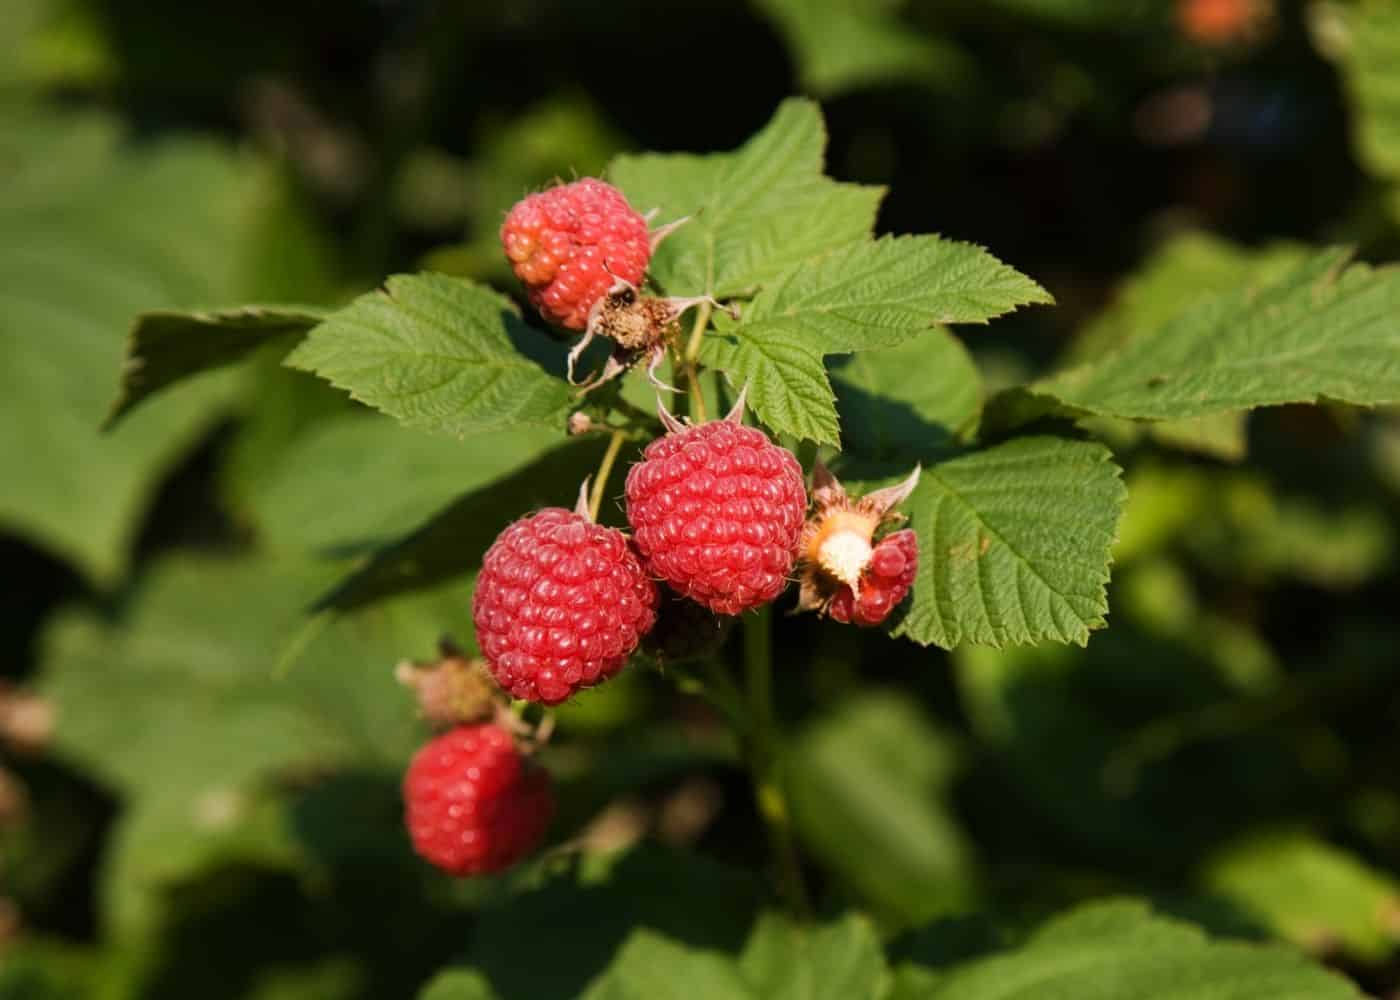 Companion Planting for Raspberries